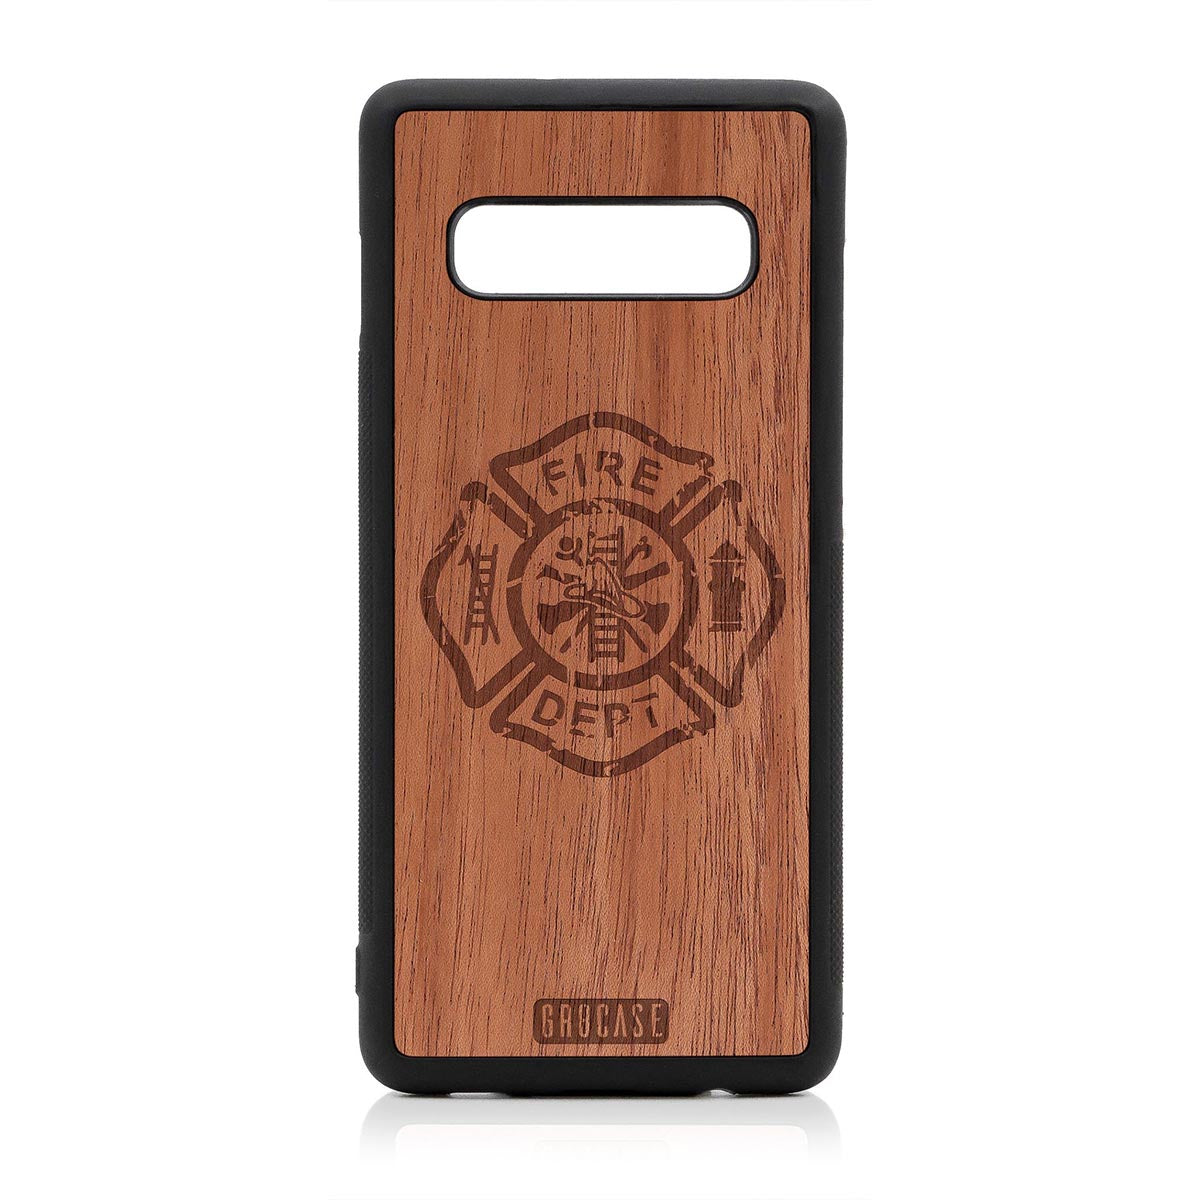 Fire Department Design Wood Case Samsung Galaxy S10 Plus by GR8CASE